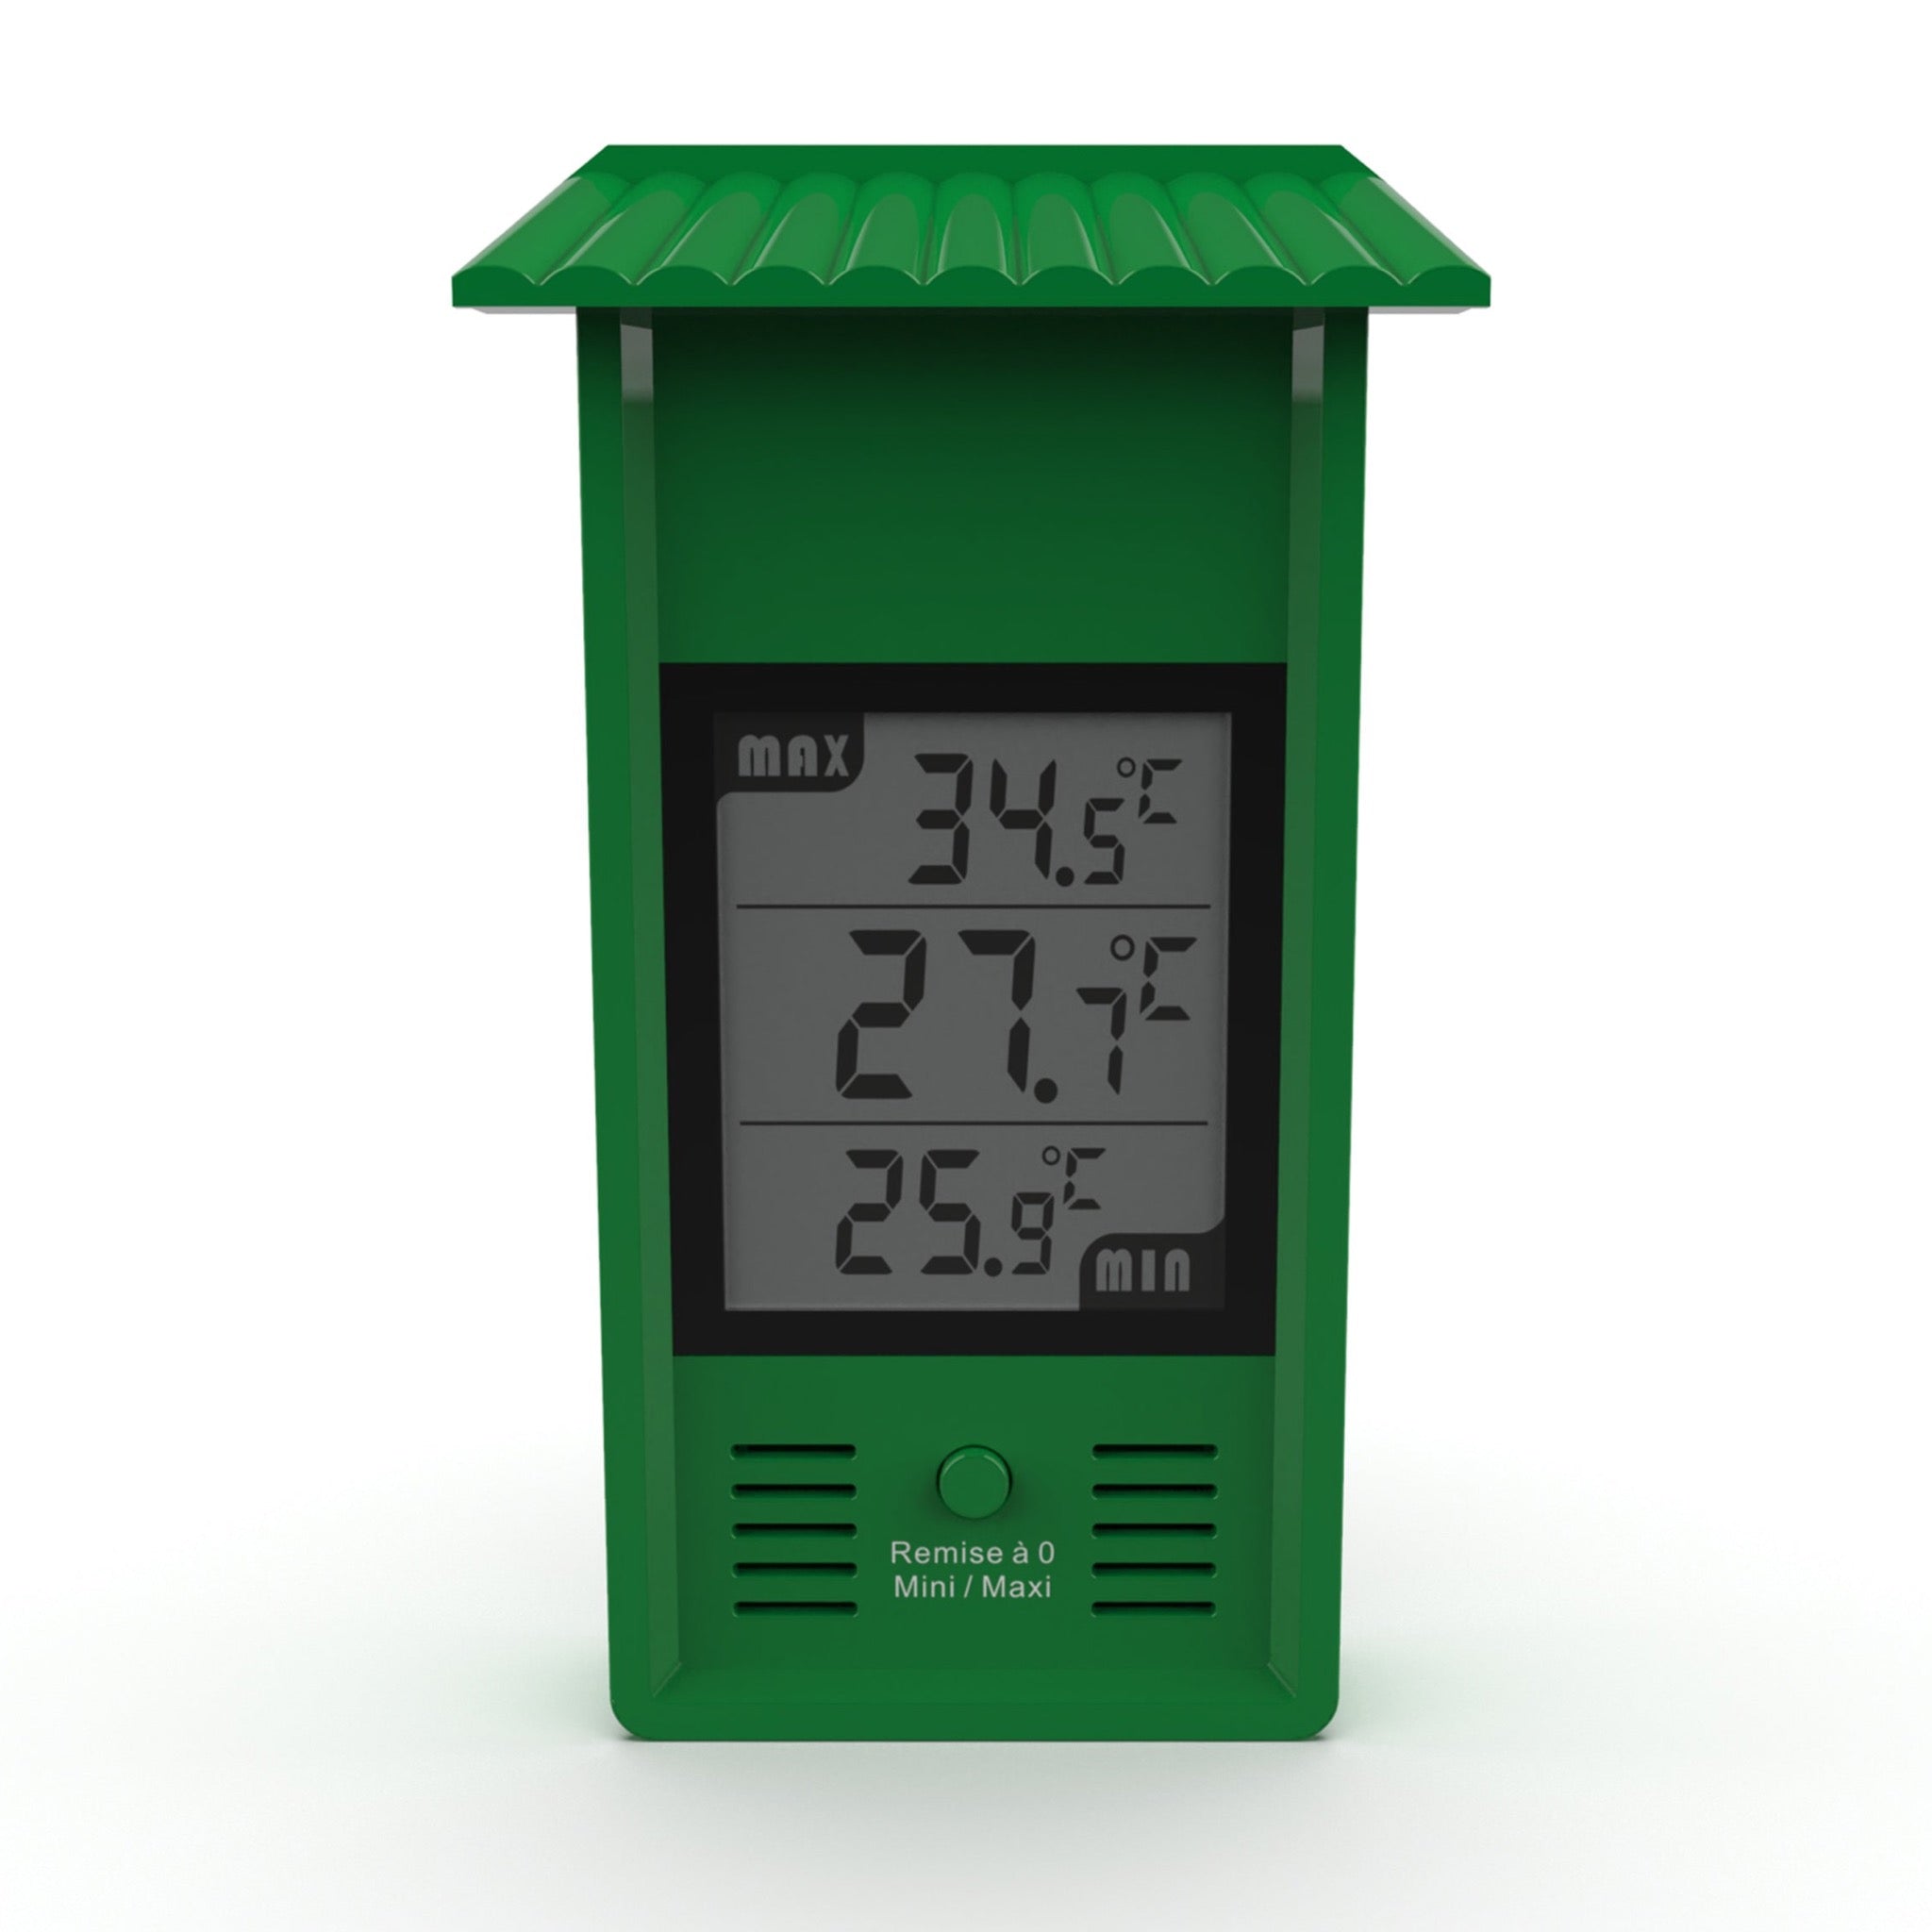 Greenhouse Max / Min Thermometer, Gardening